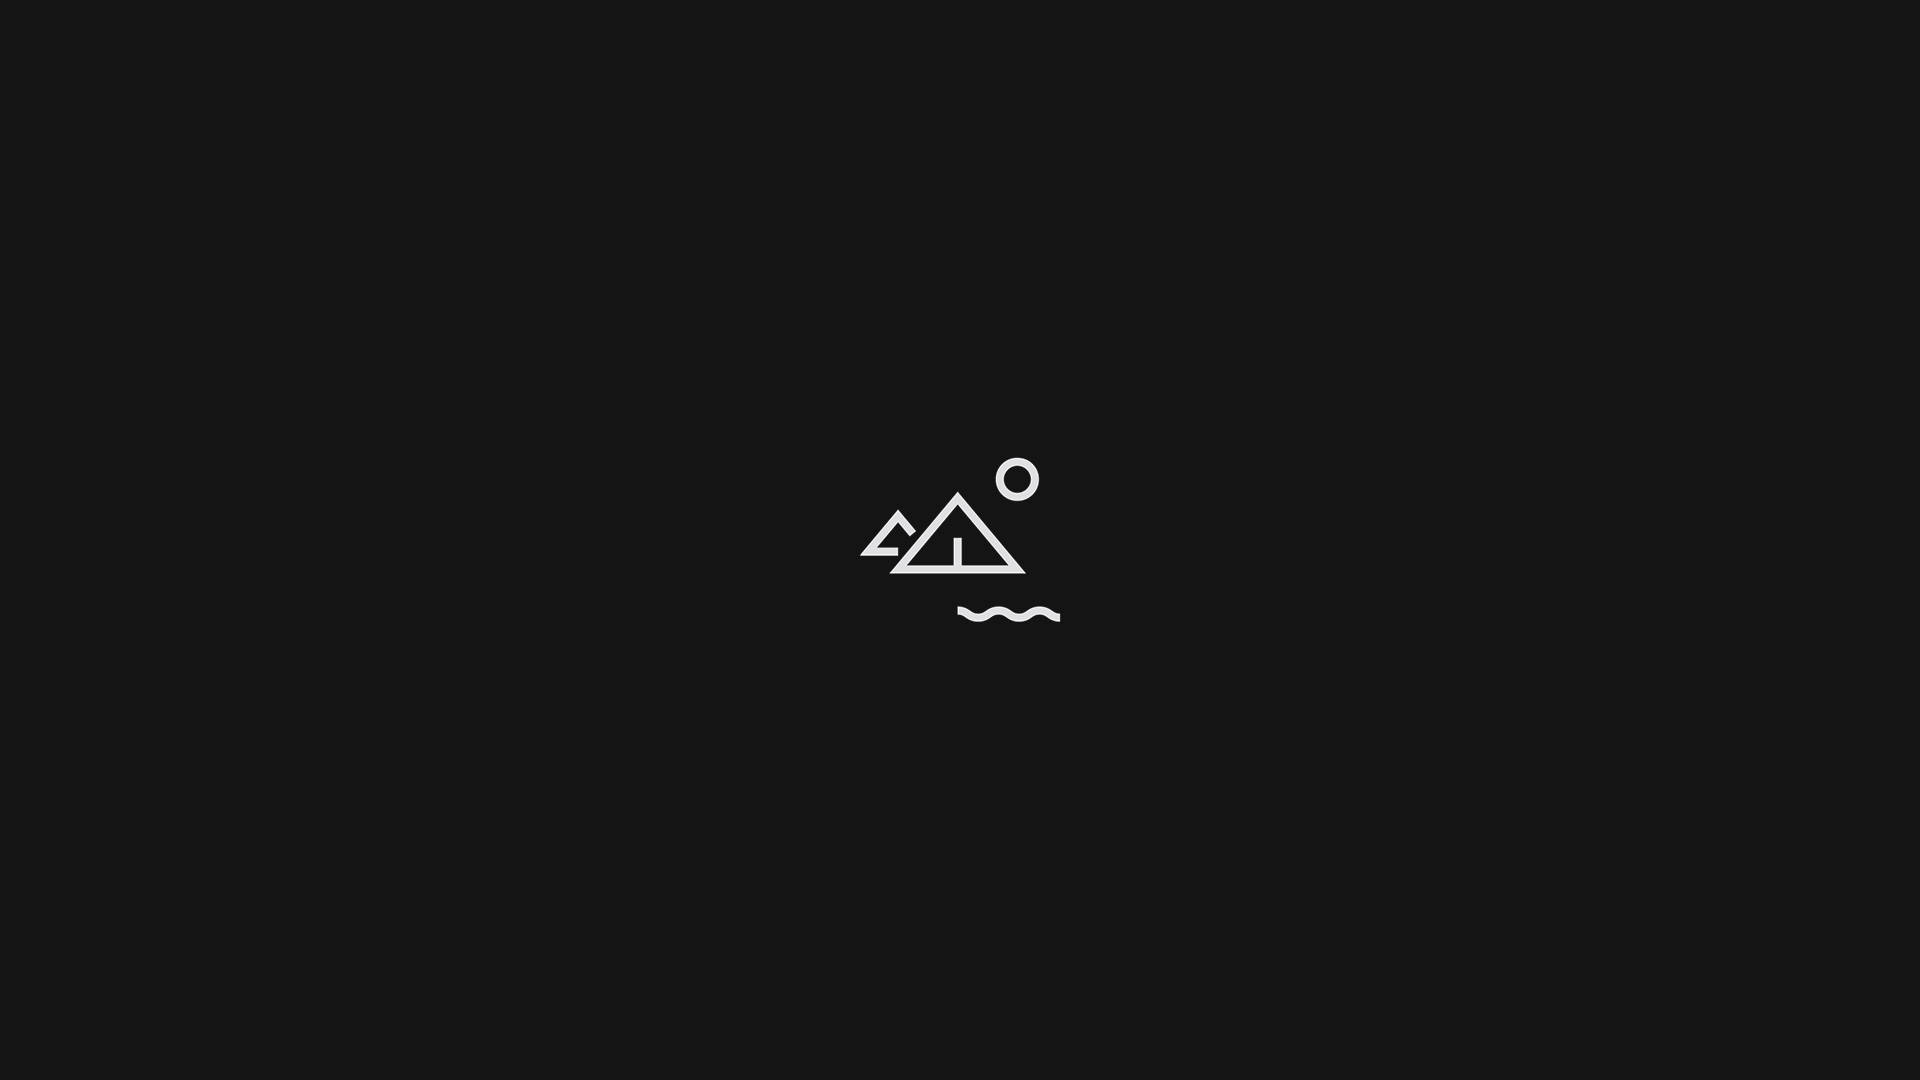 A minimalist logo for an outdoor adventure company - Minimalist